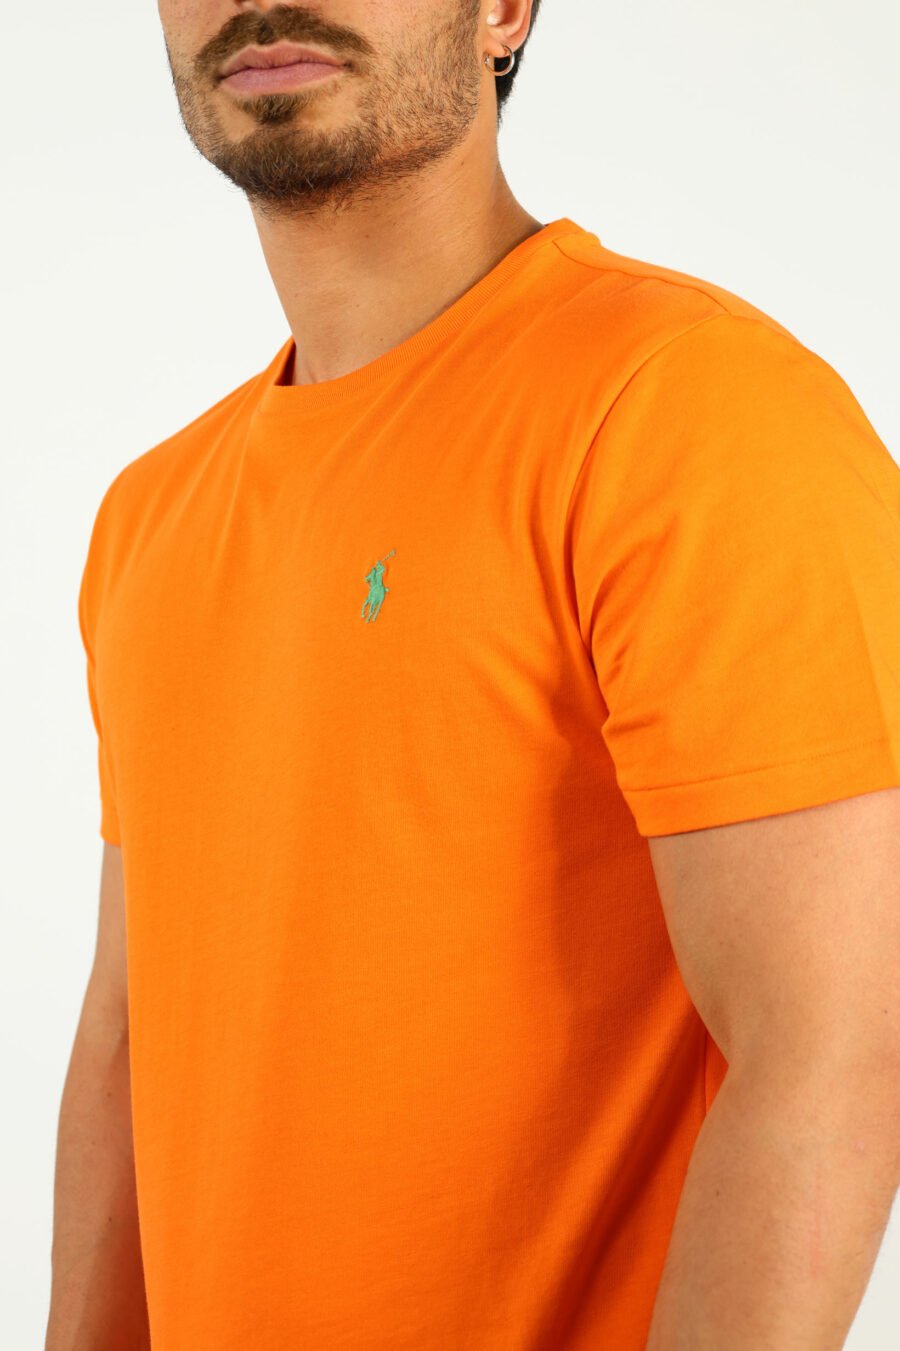 Camiseta naranja y verde con minilogo "polo" - number14002